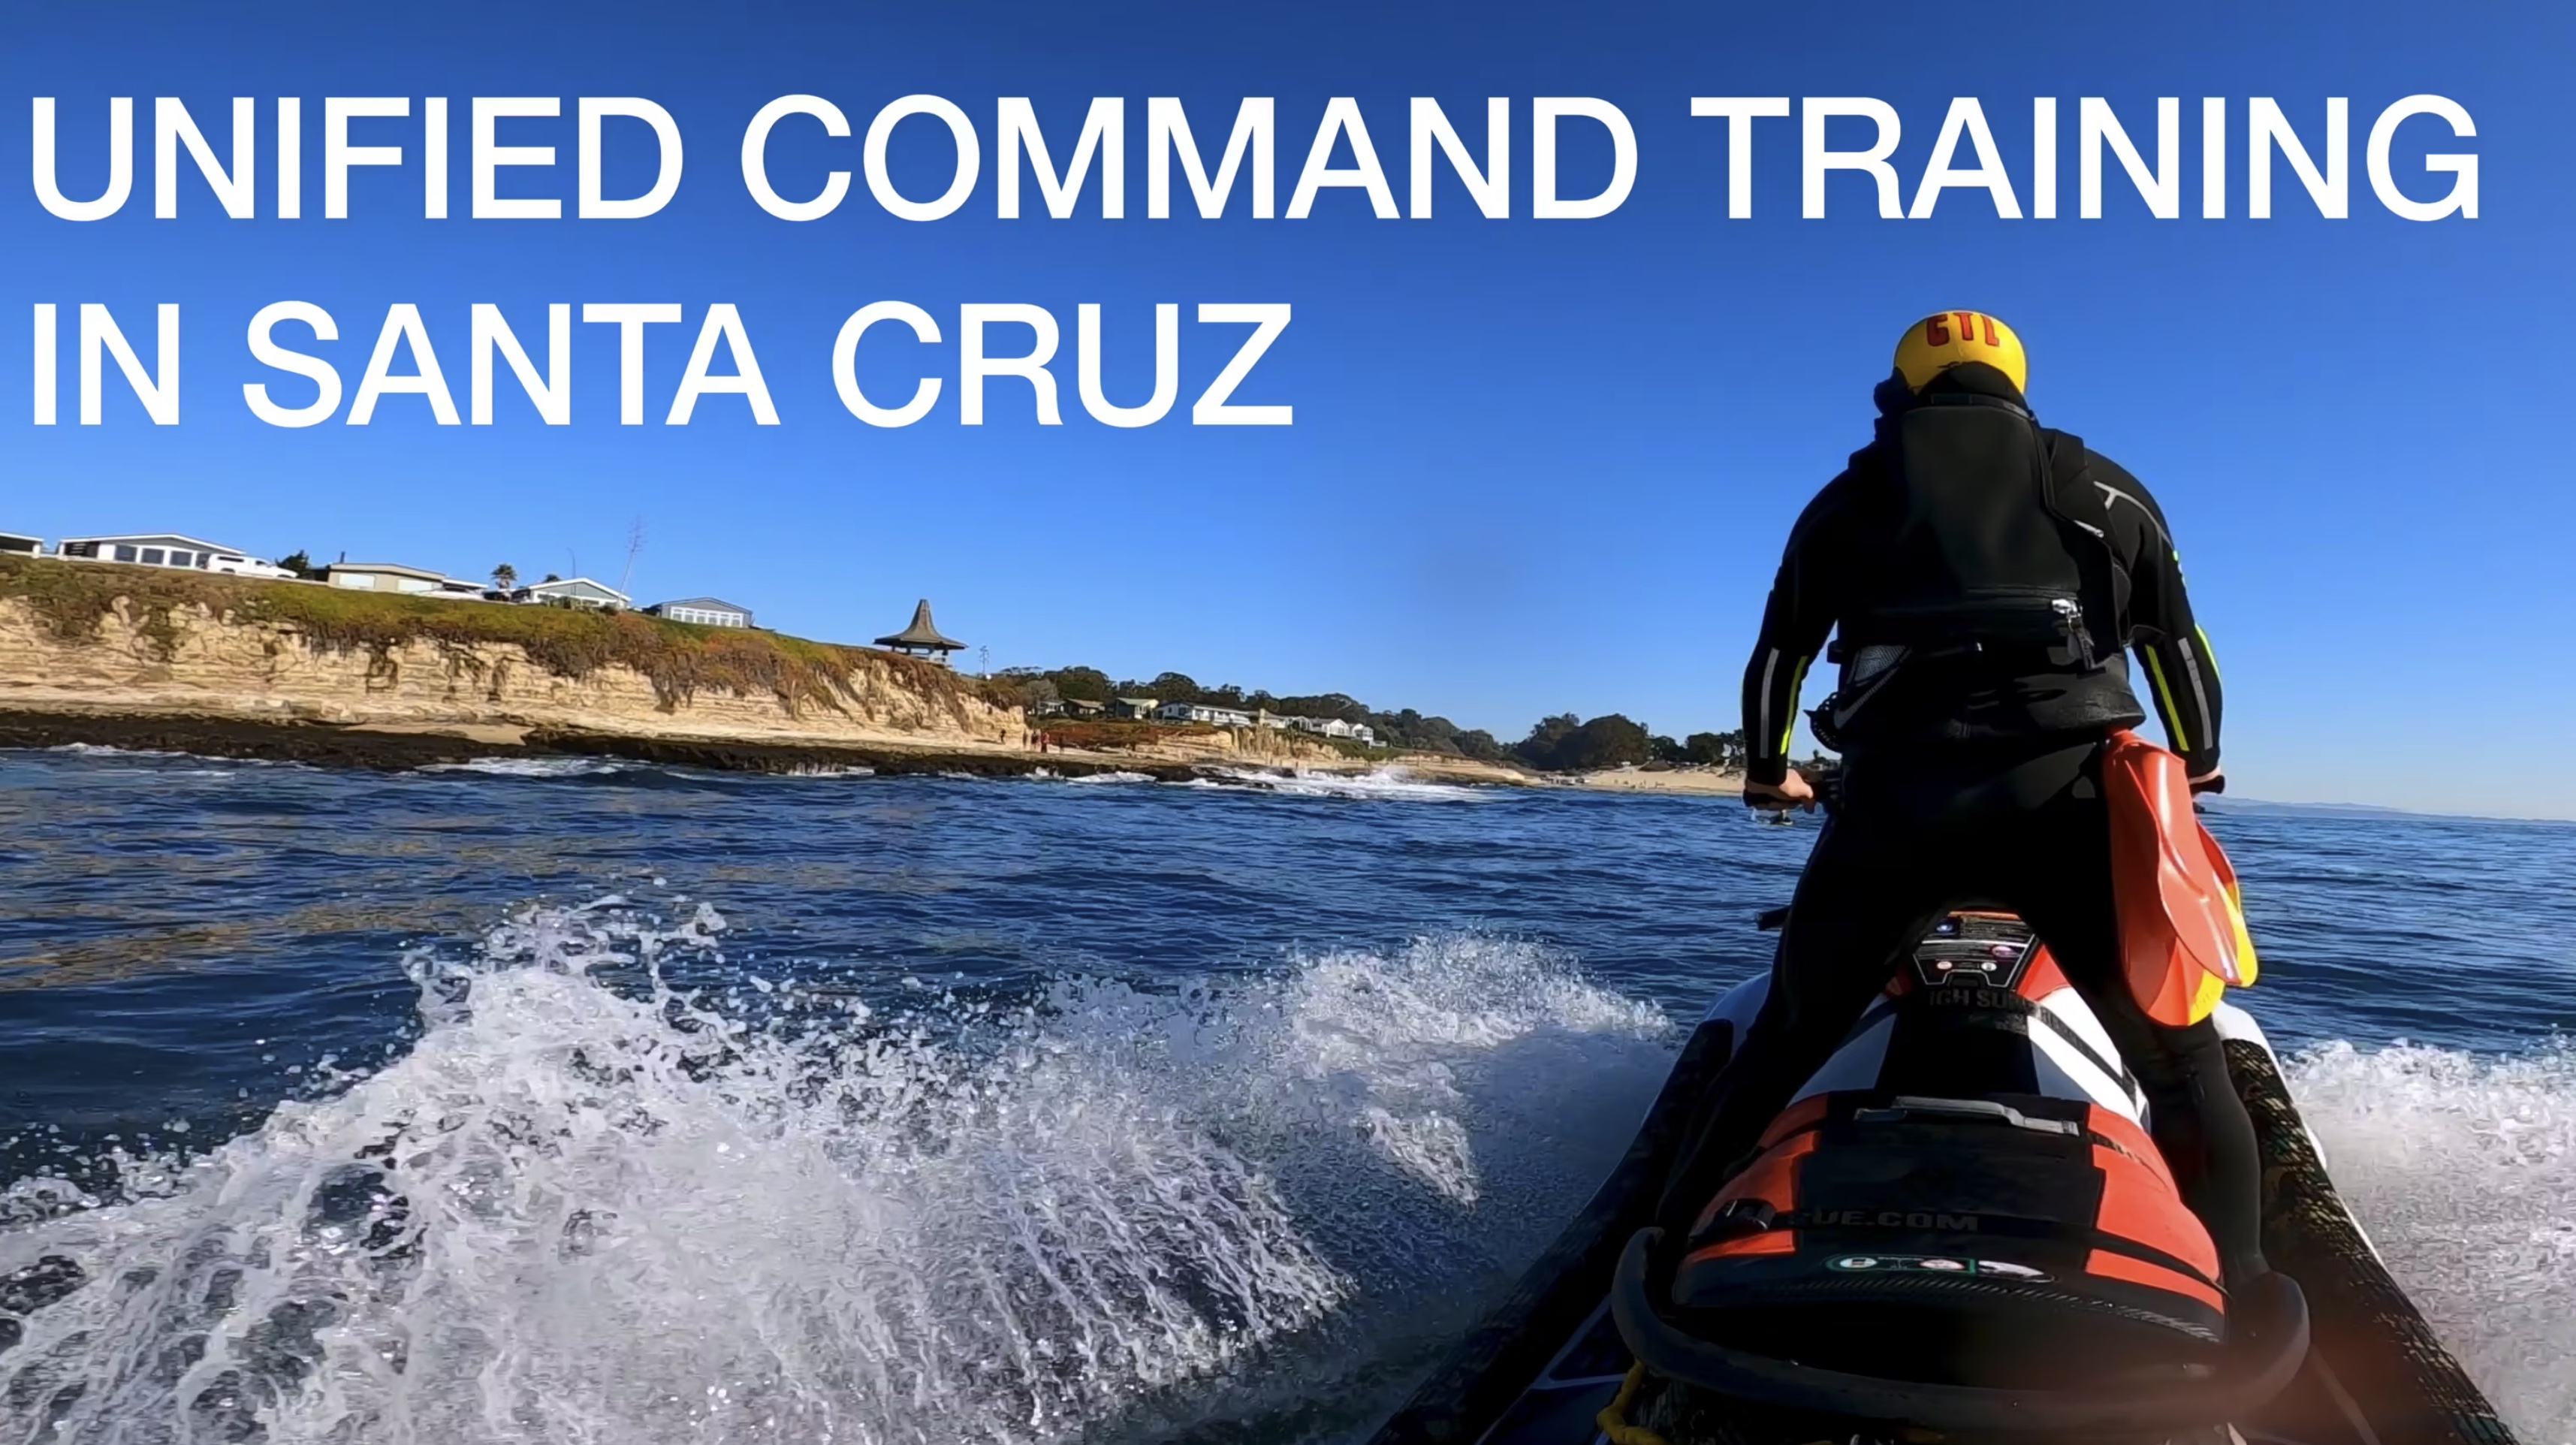 Unified Command Training for Santa Cruz County - NYX Awards Winner 